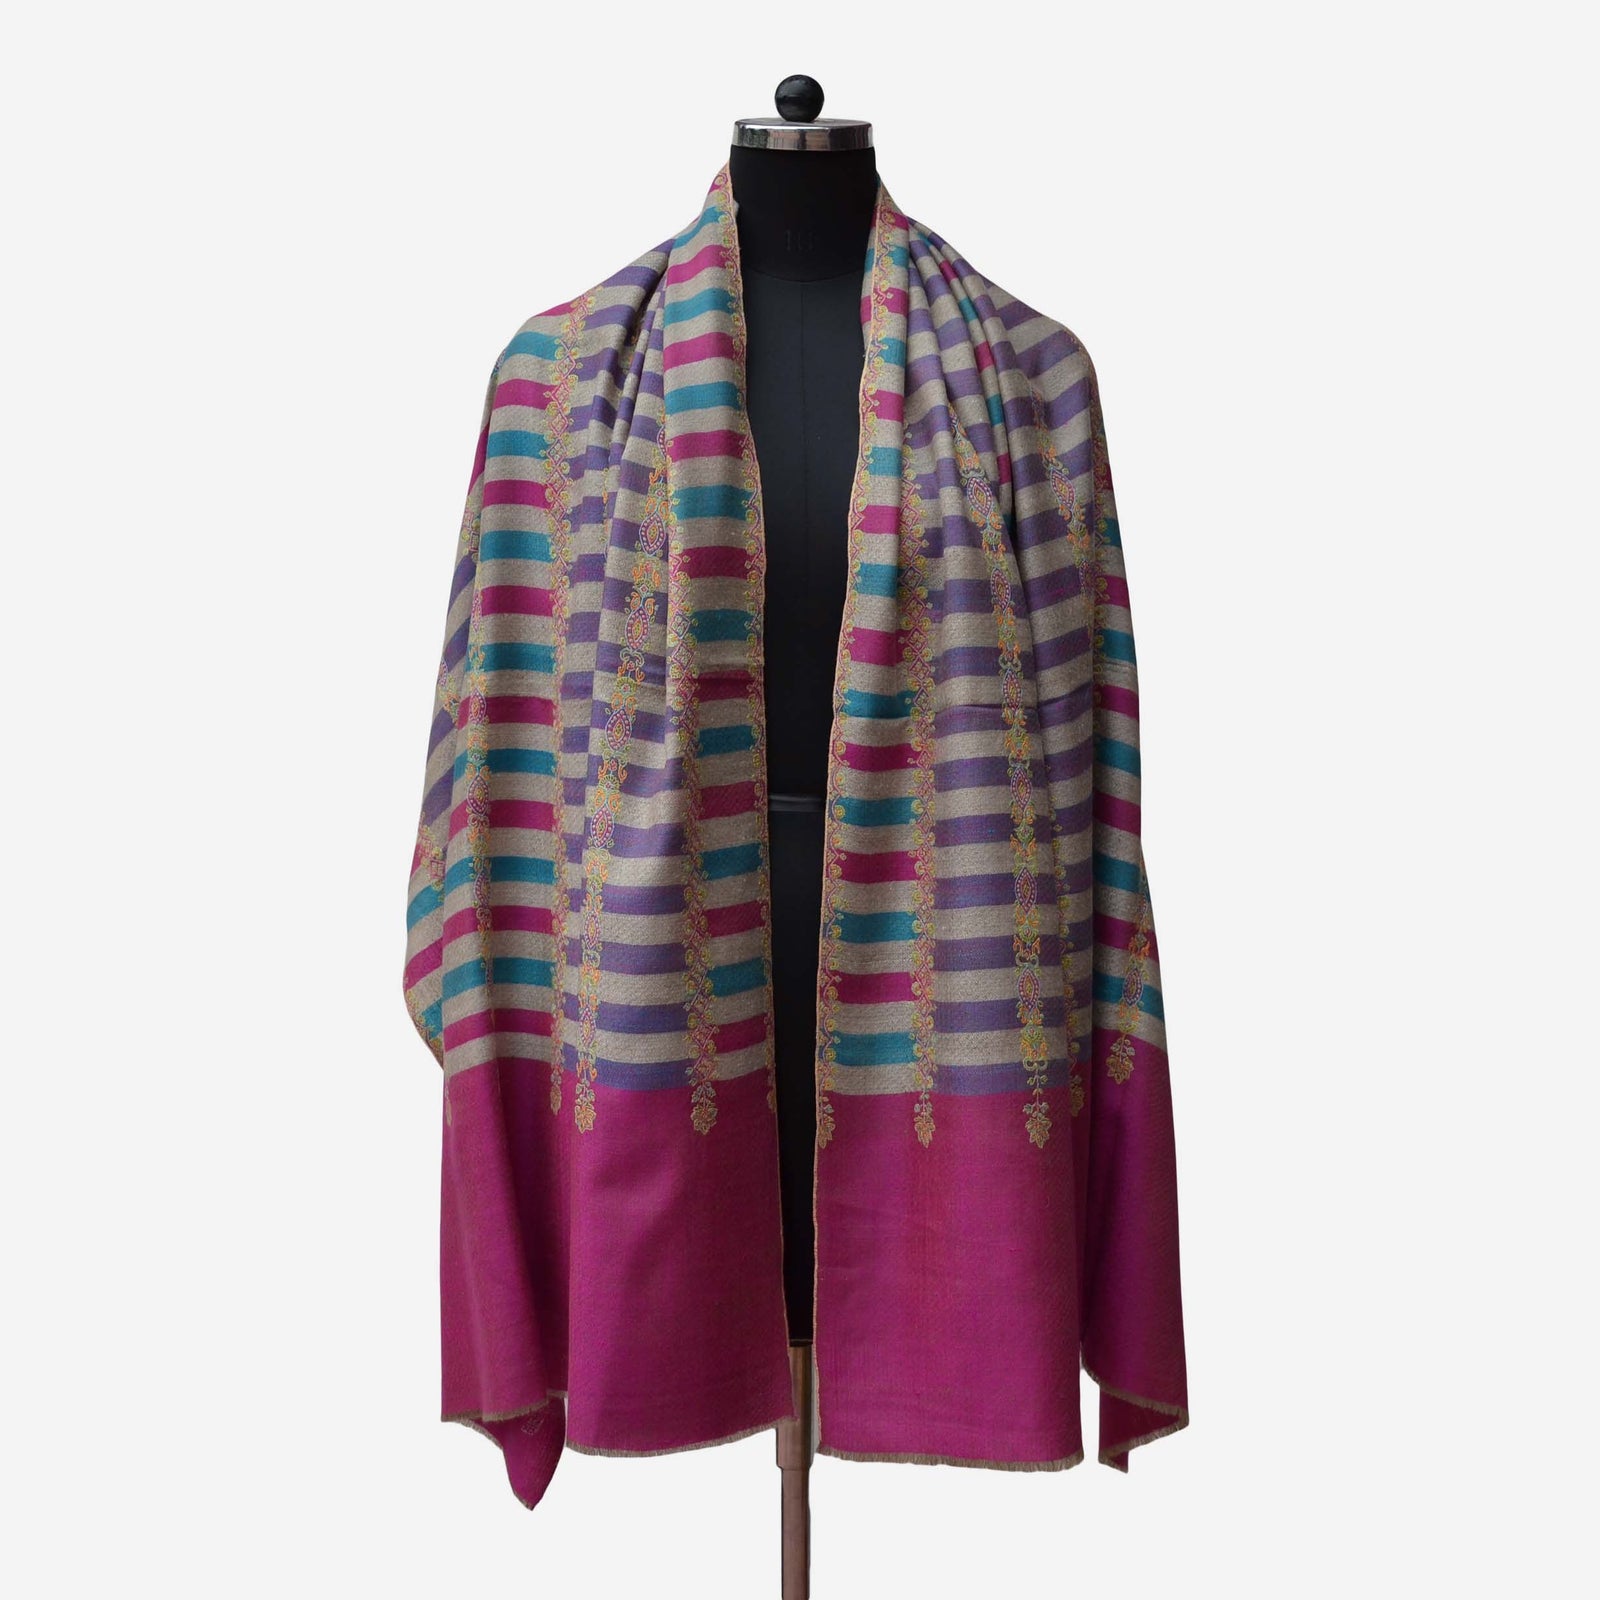 Best purple cashmere pashmina shawls online